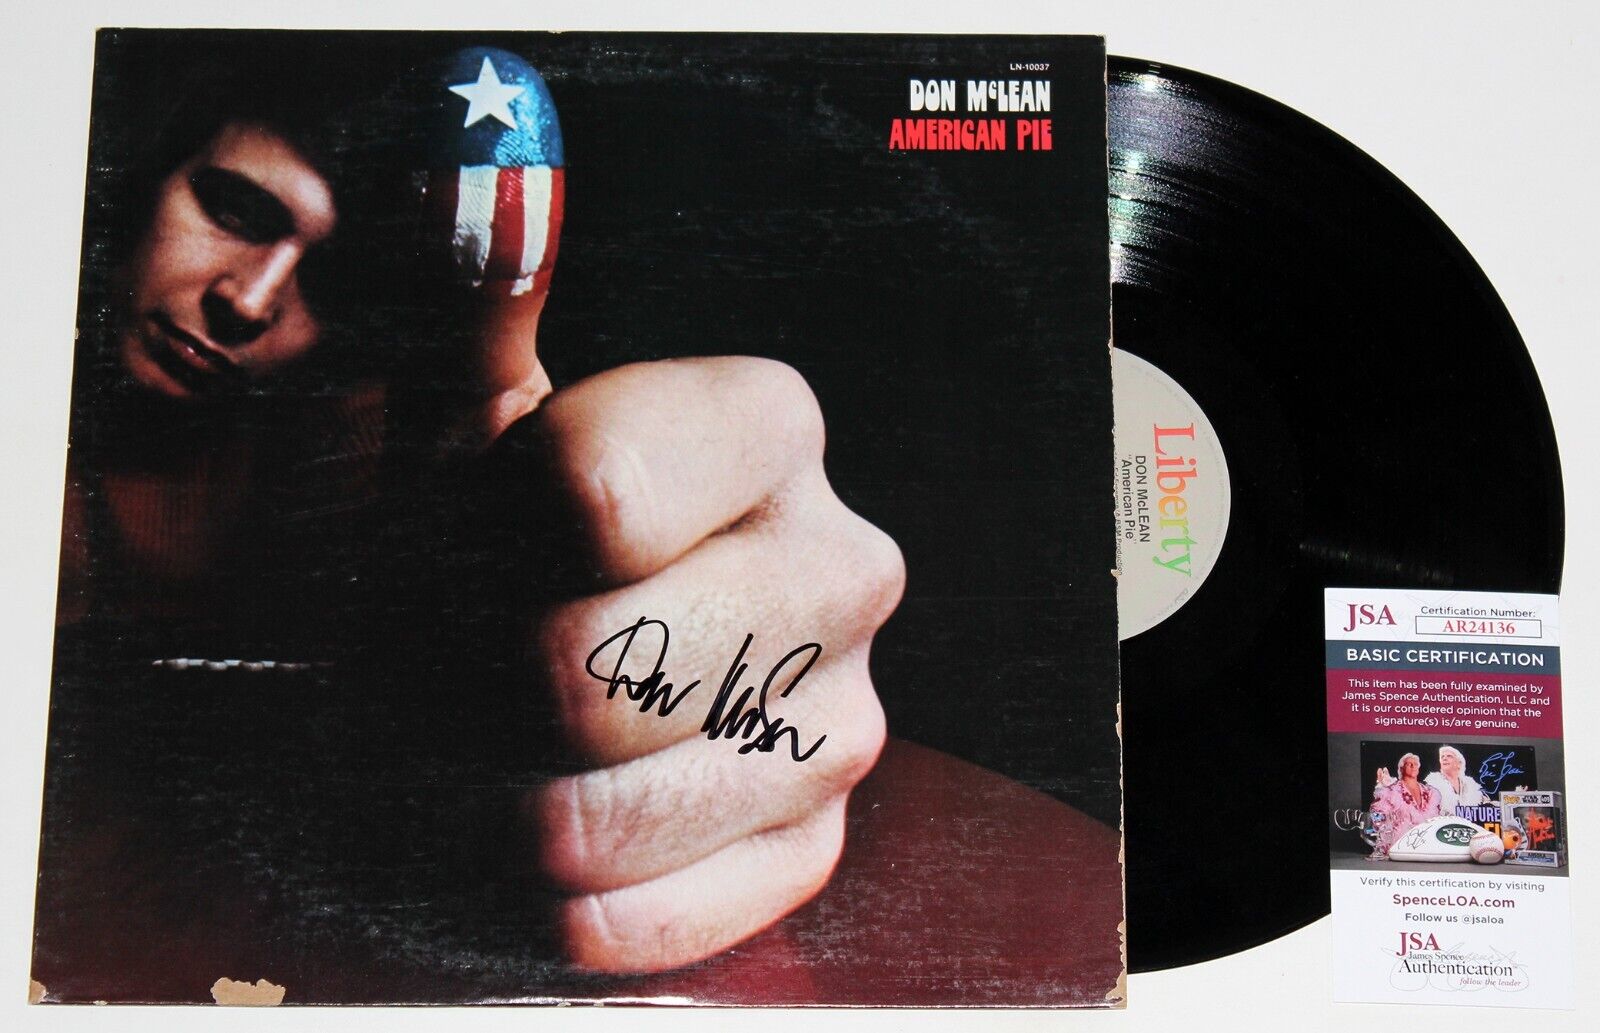 DON MCLEAN SIGNED AMERICAN PIE LP VINYL RECORD AUTOGRAPHED RARE +JSA COA